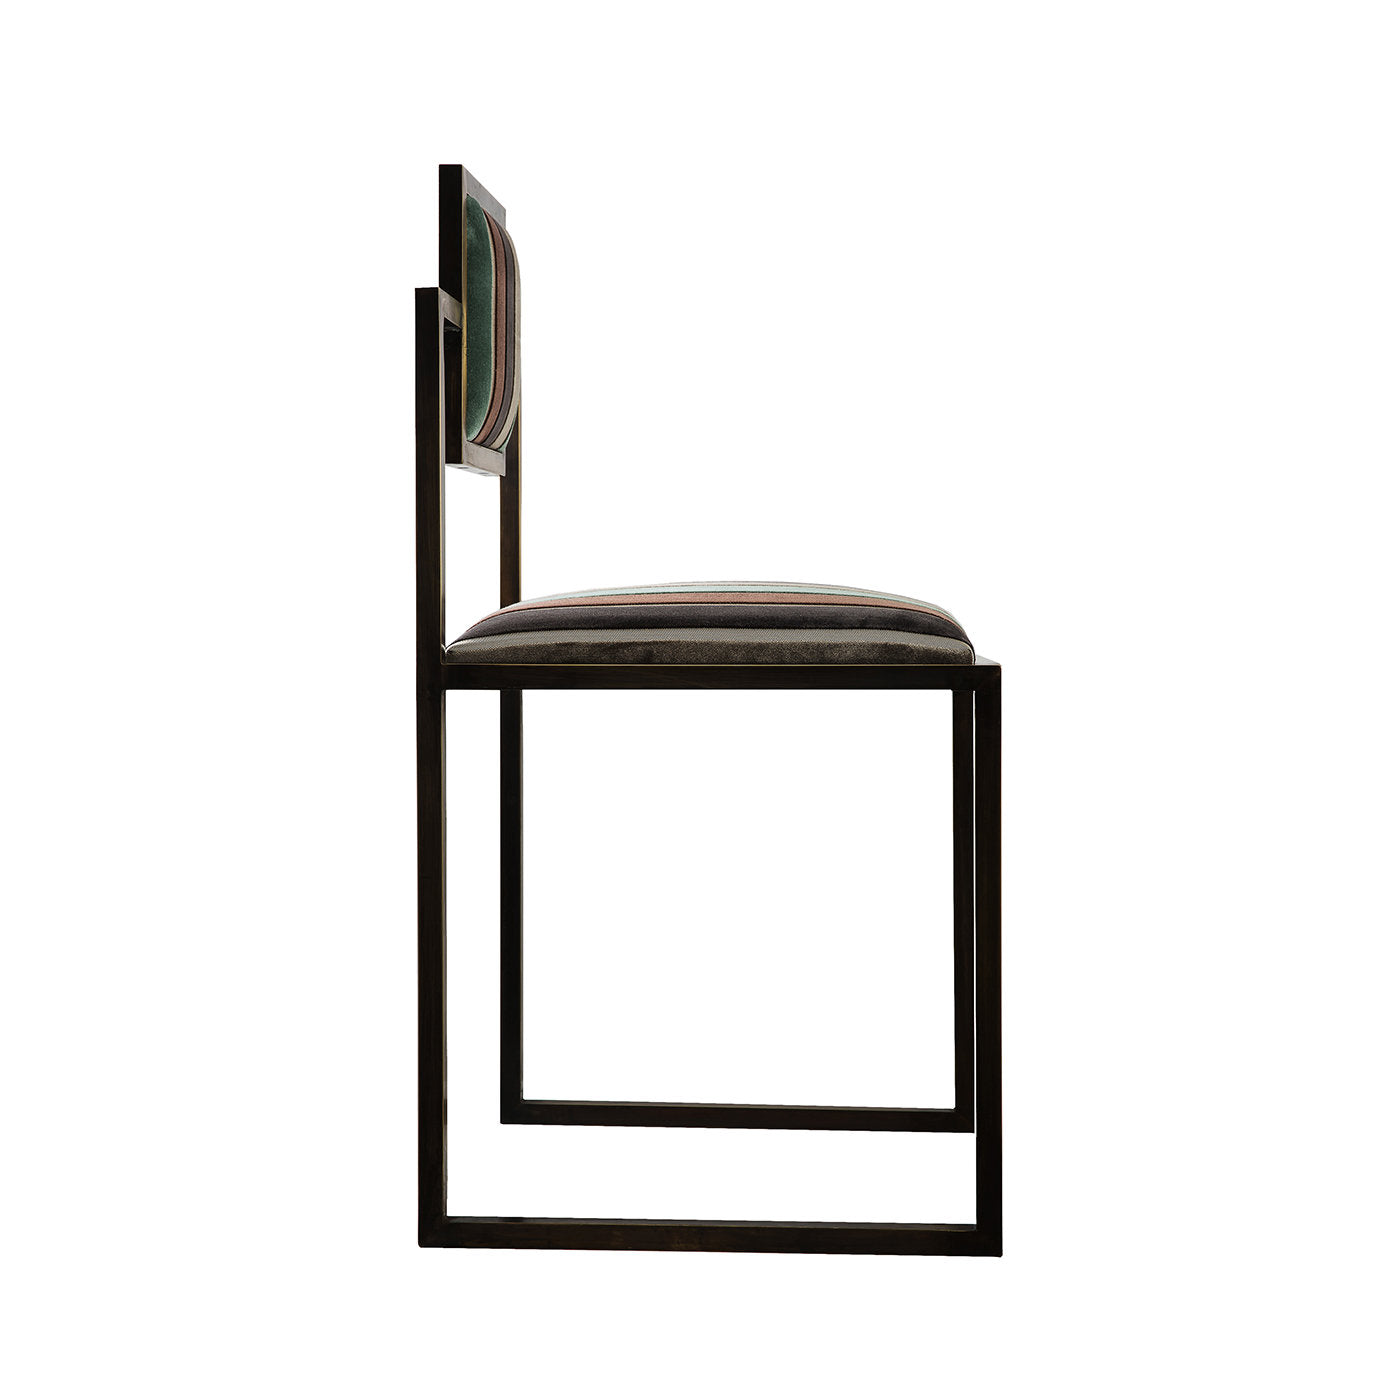 Sarnia Aqua Brass Square Chair - Alternative view 2